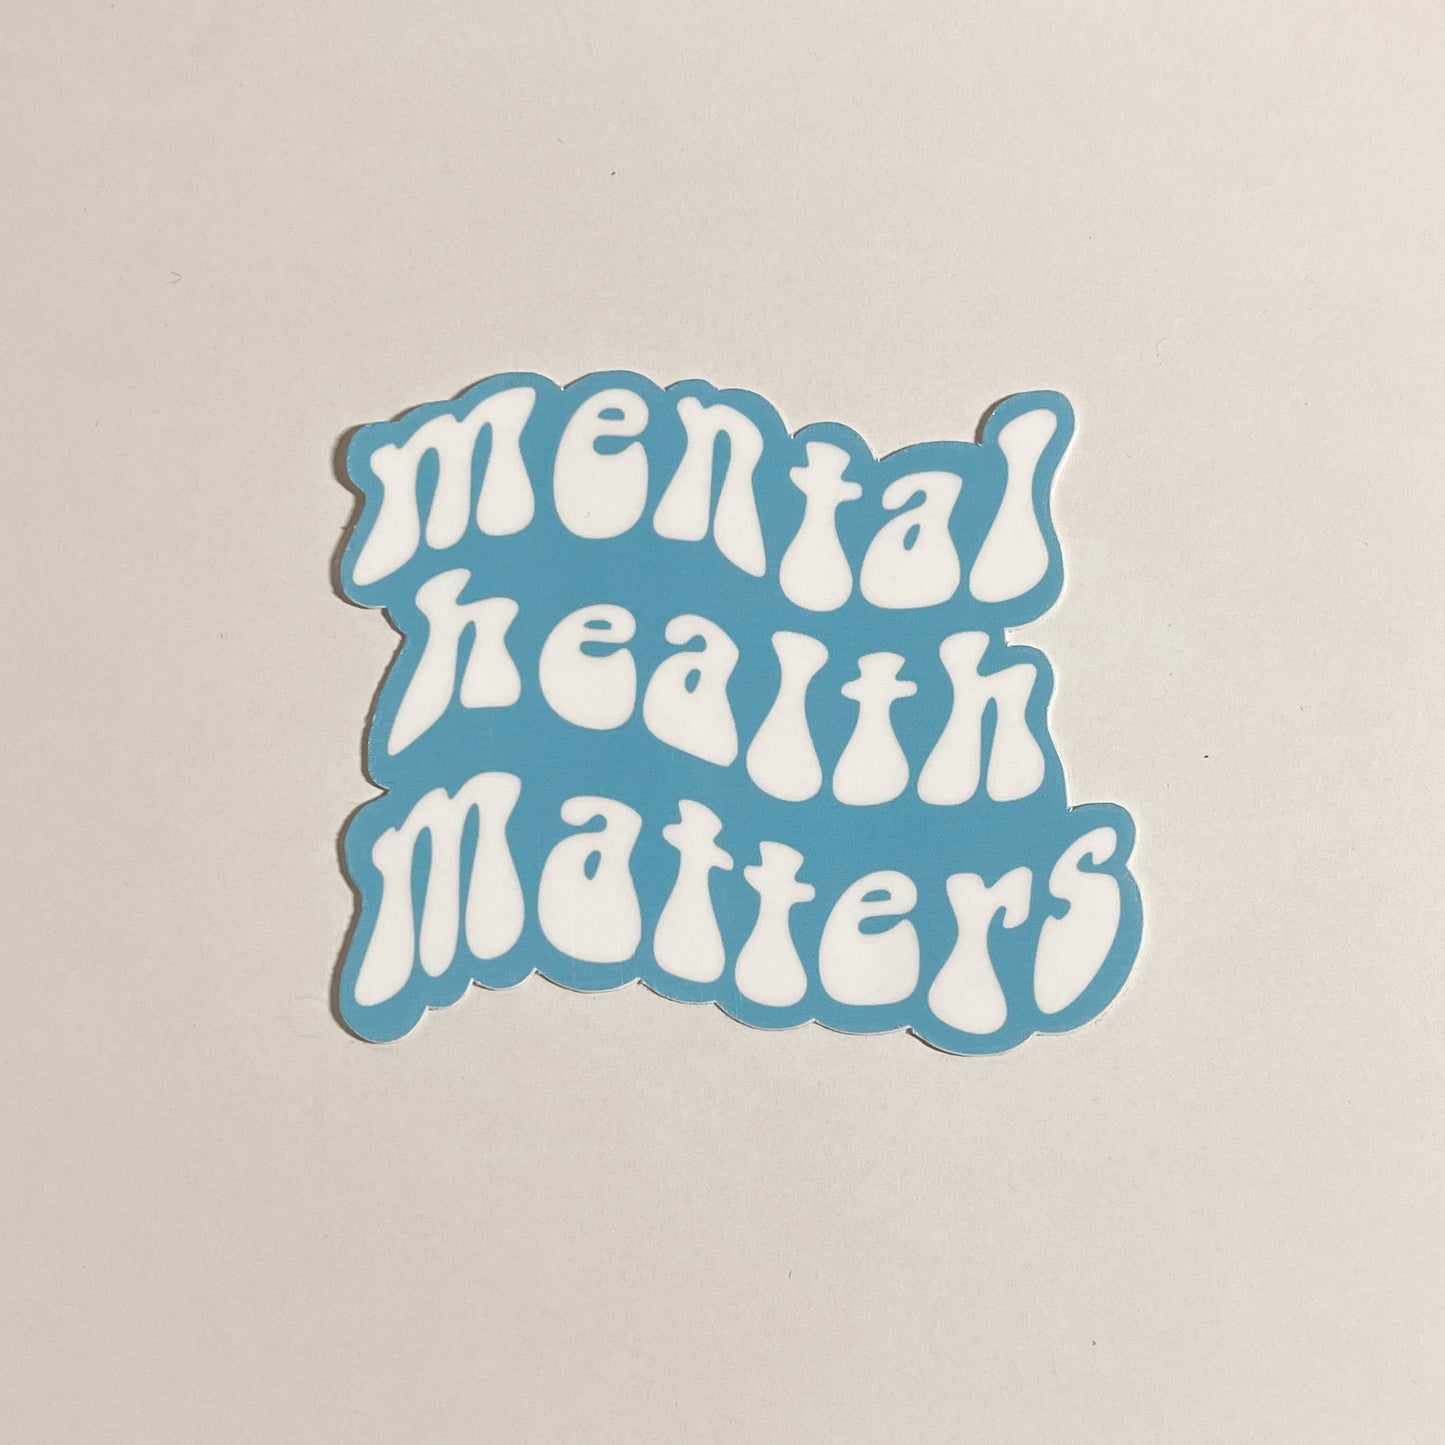 mental health matters sticker - blue